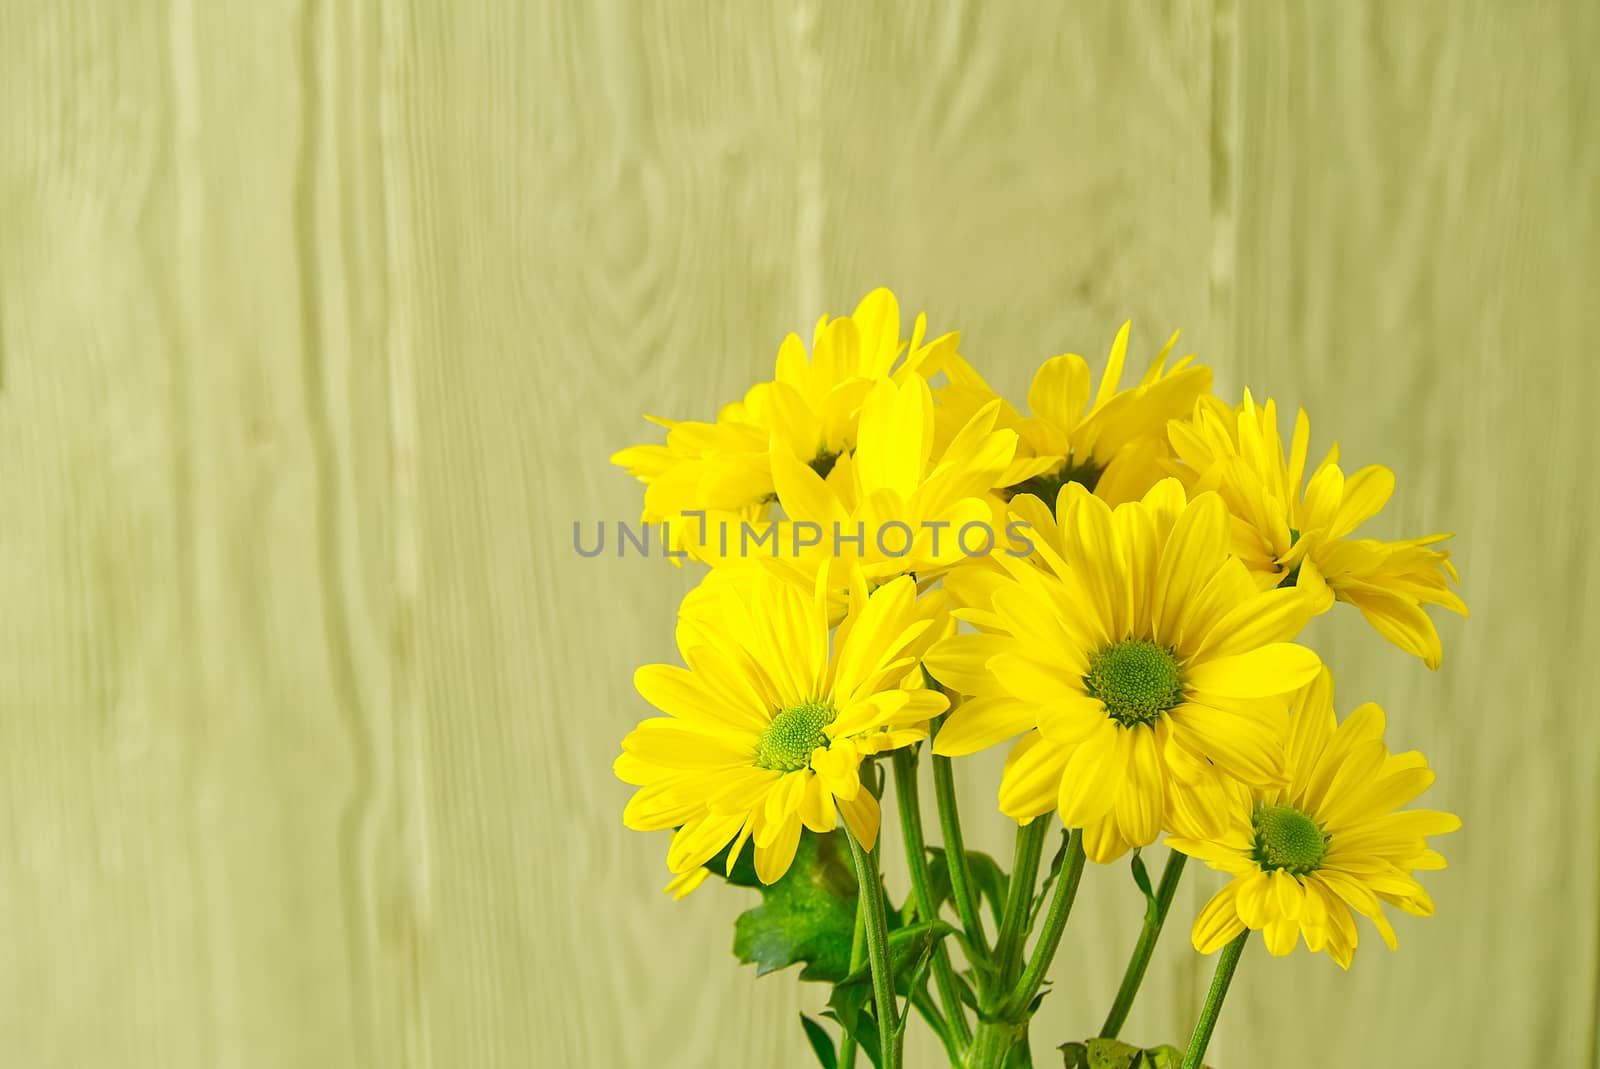 Beautiful fresh yellow chrysanthemum on light green wooden background, close-up shot, yellow daisies flowers